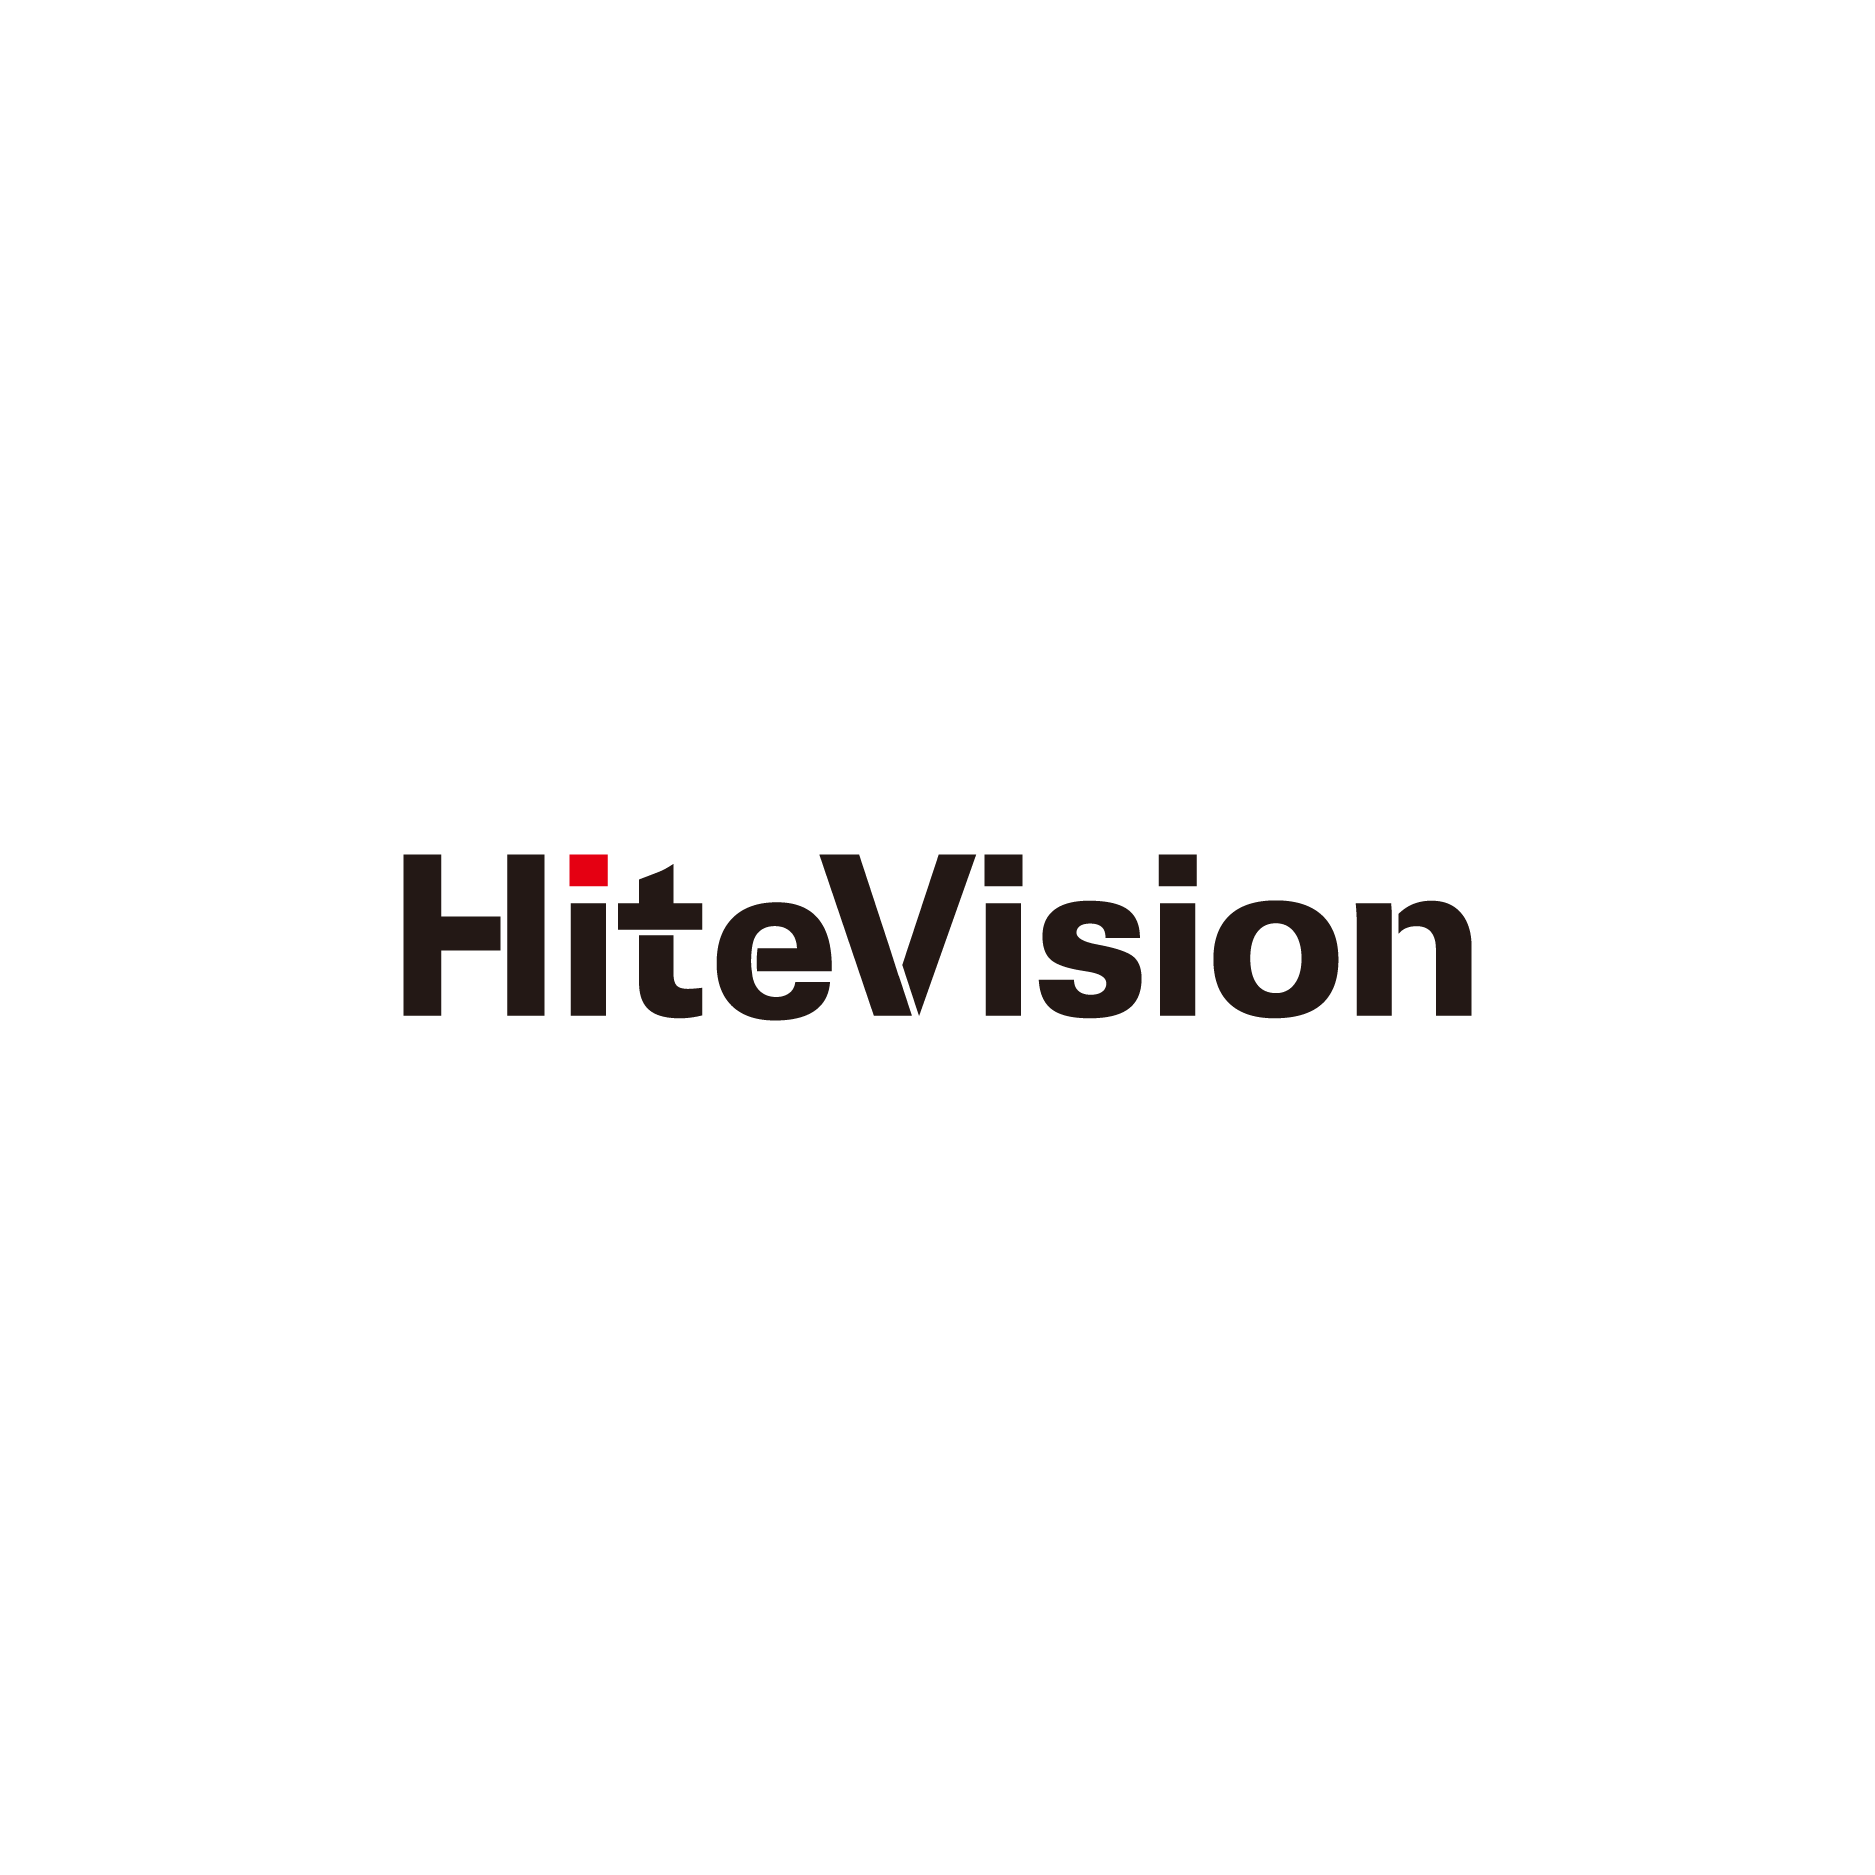 HiteVision